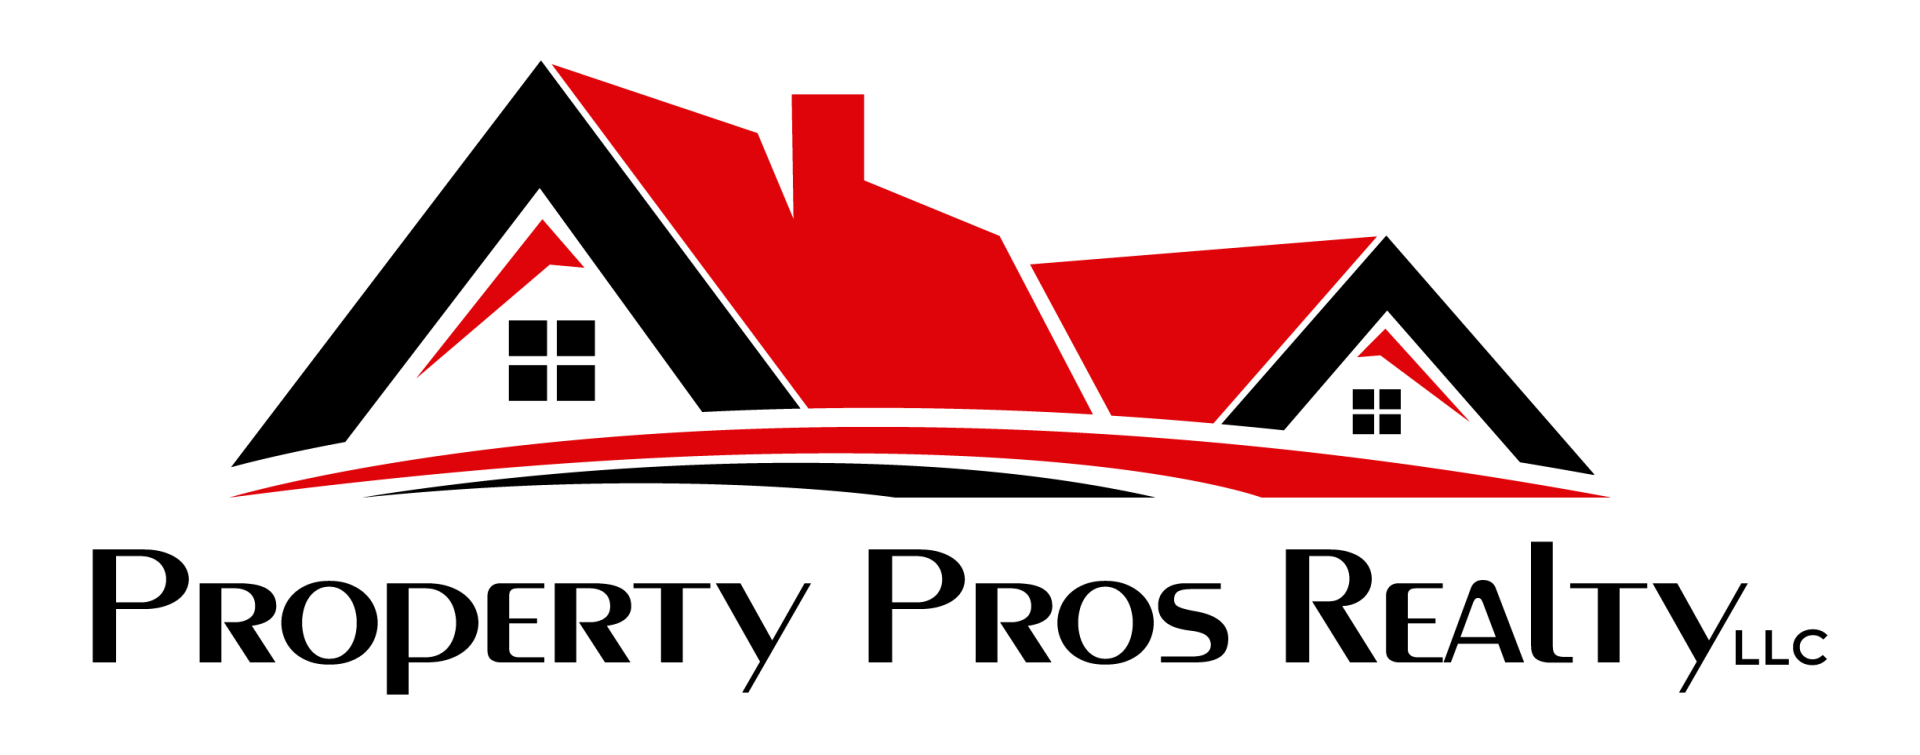 Adobe Group Property Management Logo